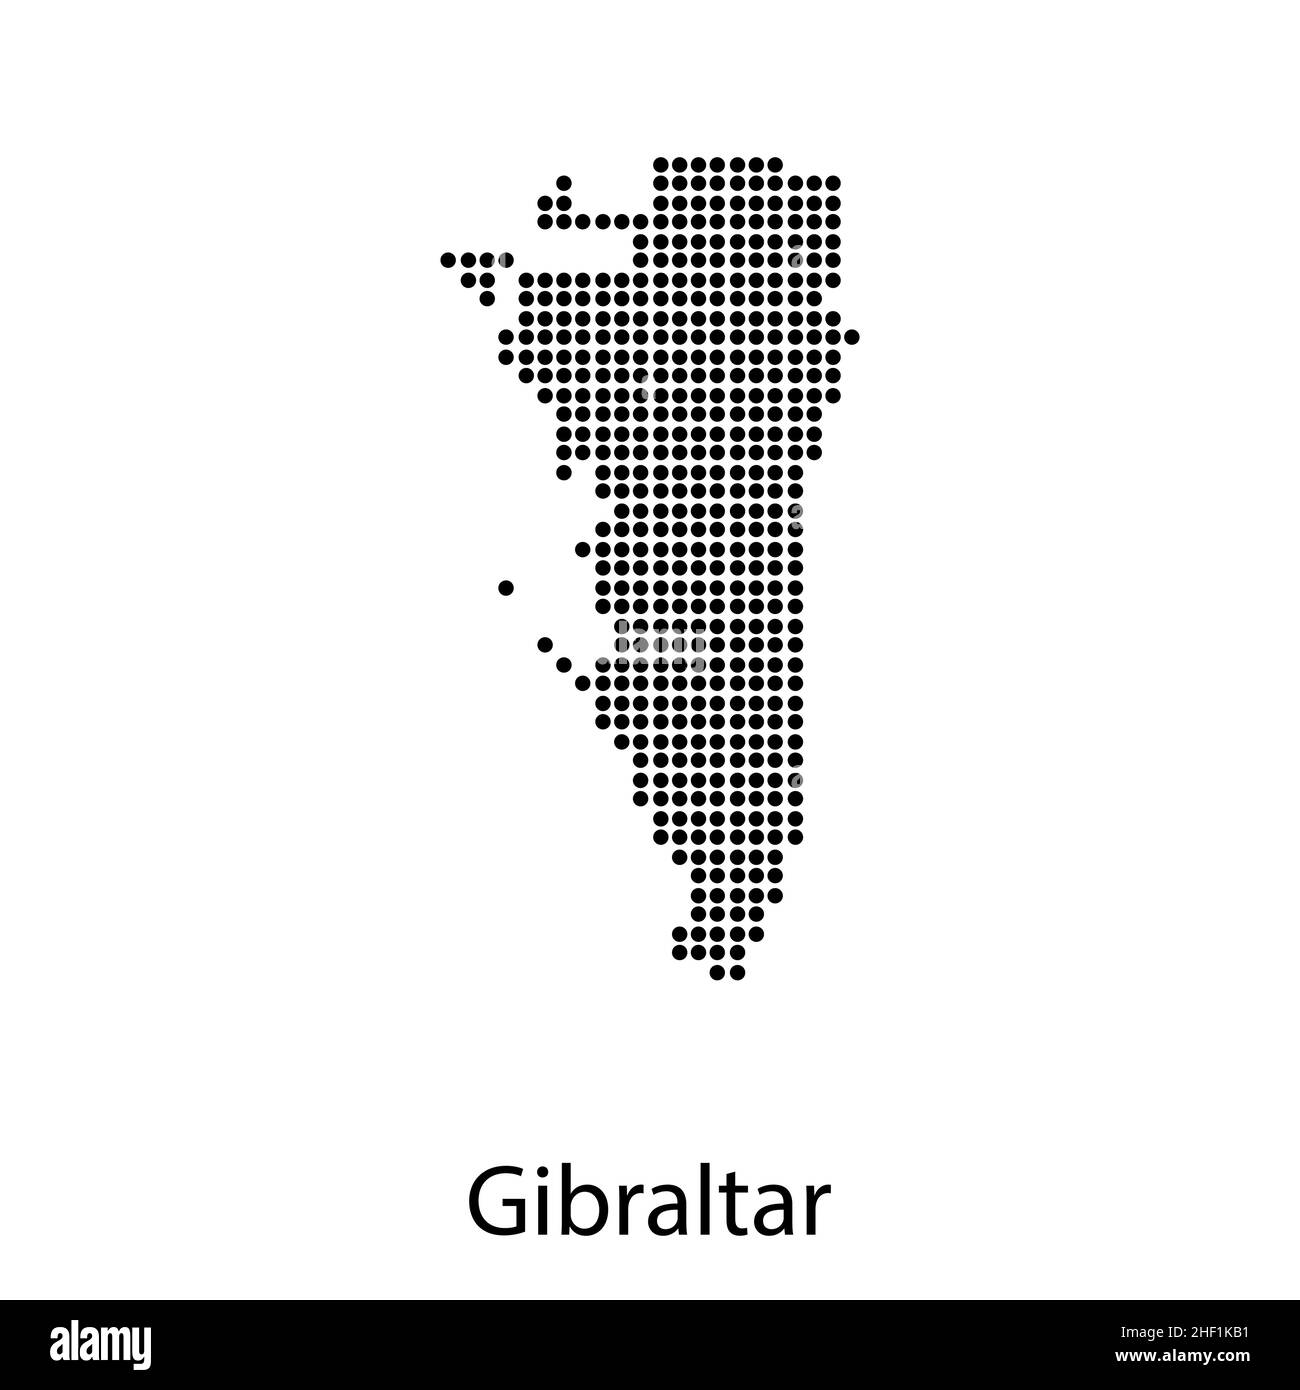 Carte vectorielle - pays de gibraltar sur fond blanc. Illustration vectorielle Illustration de Vecteur